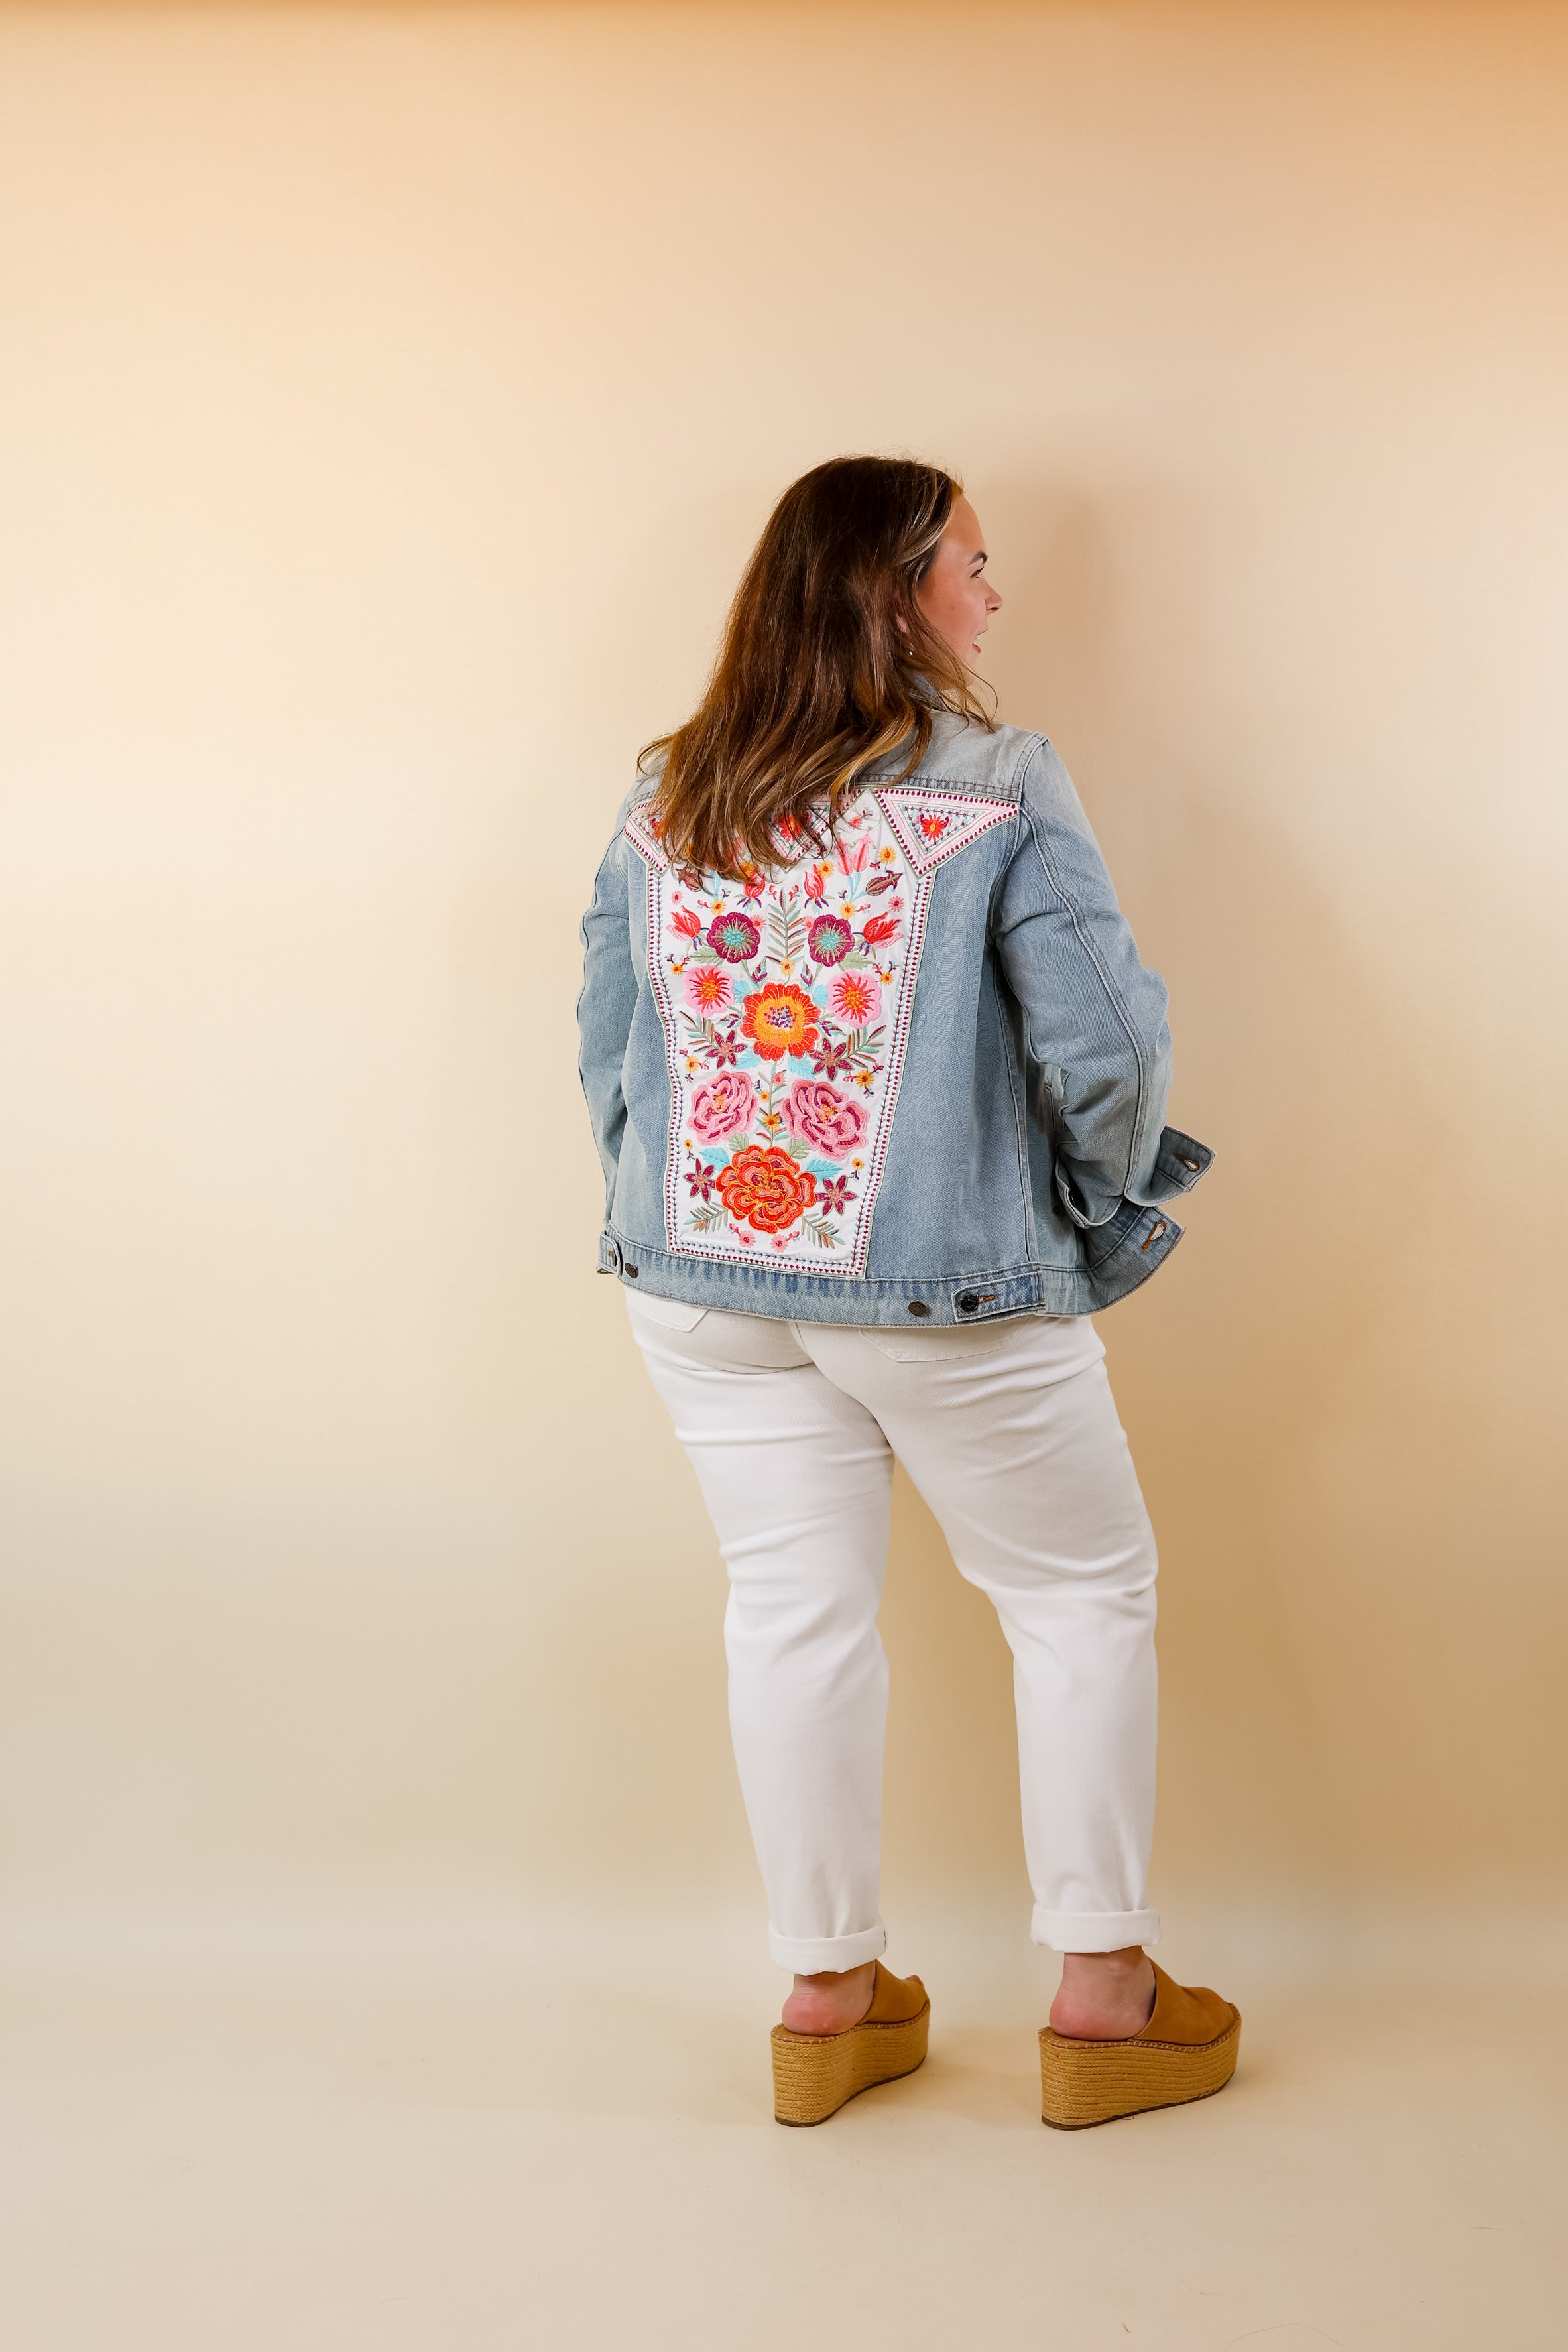 Prime Time Floral Embroidered Denim Jacket in Light Wash - Giddy Up Glamour Boutique